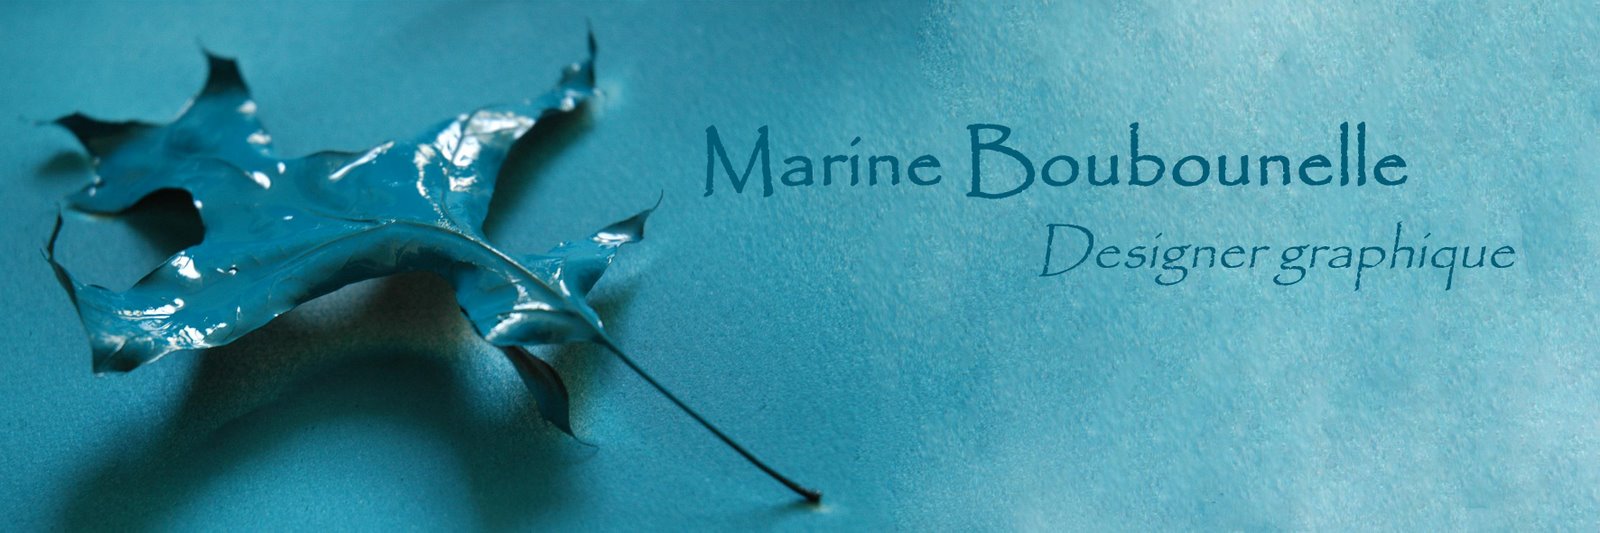 marine boubounelle